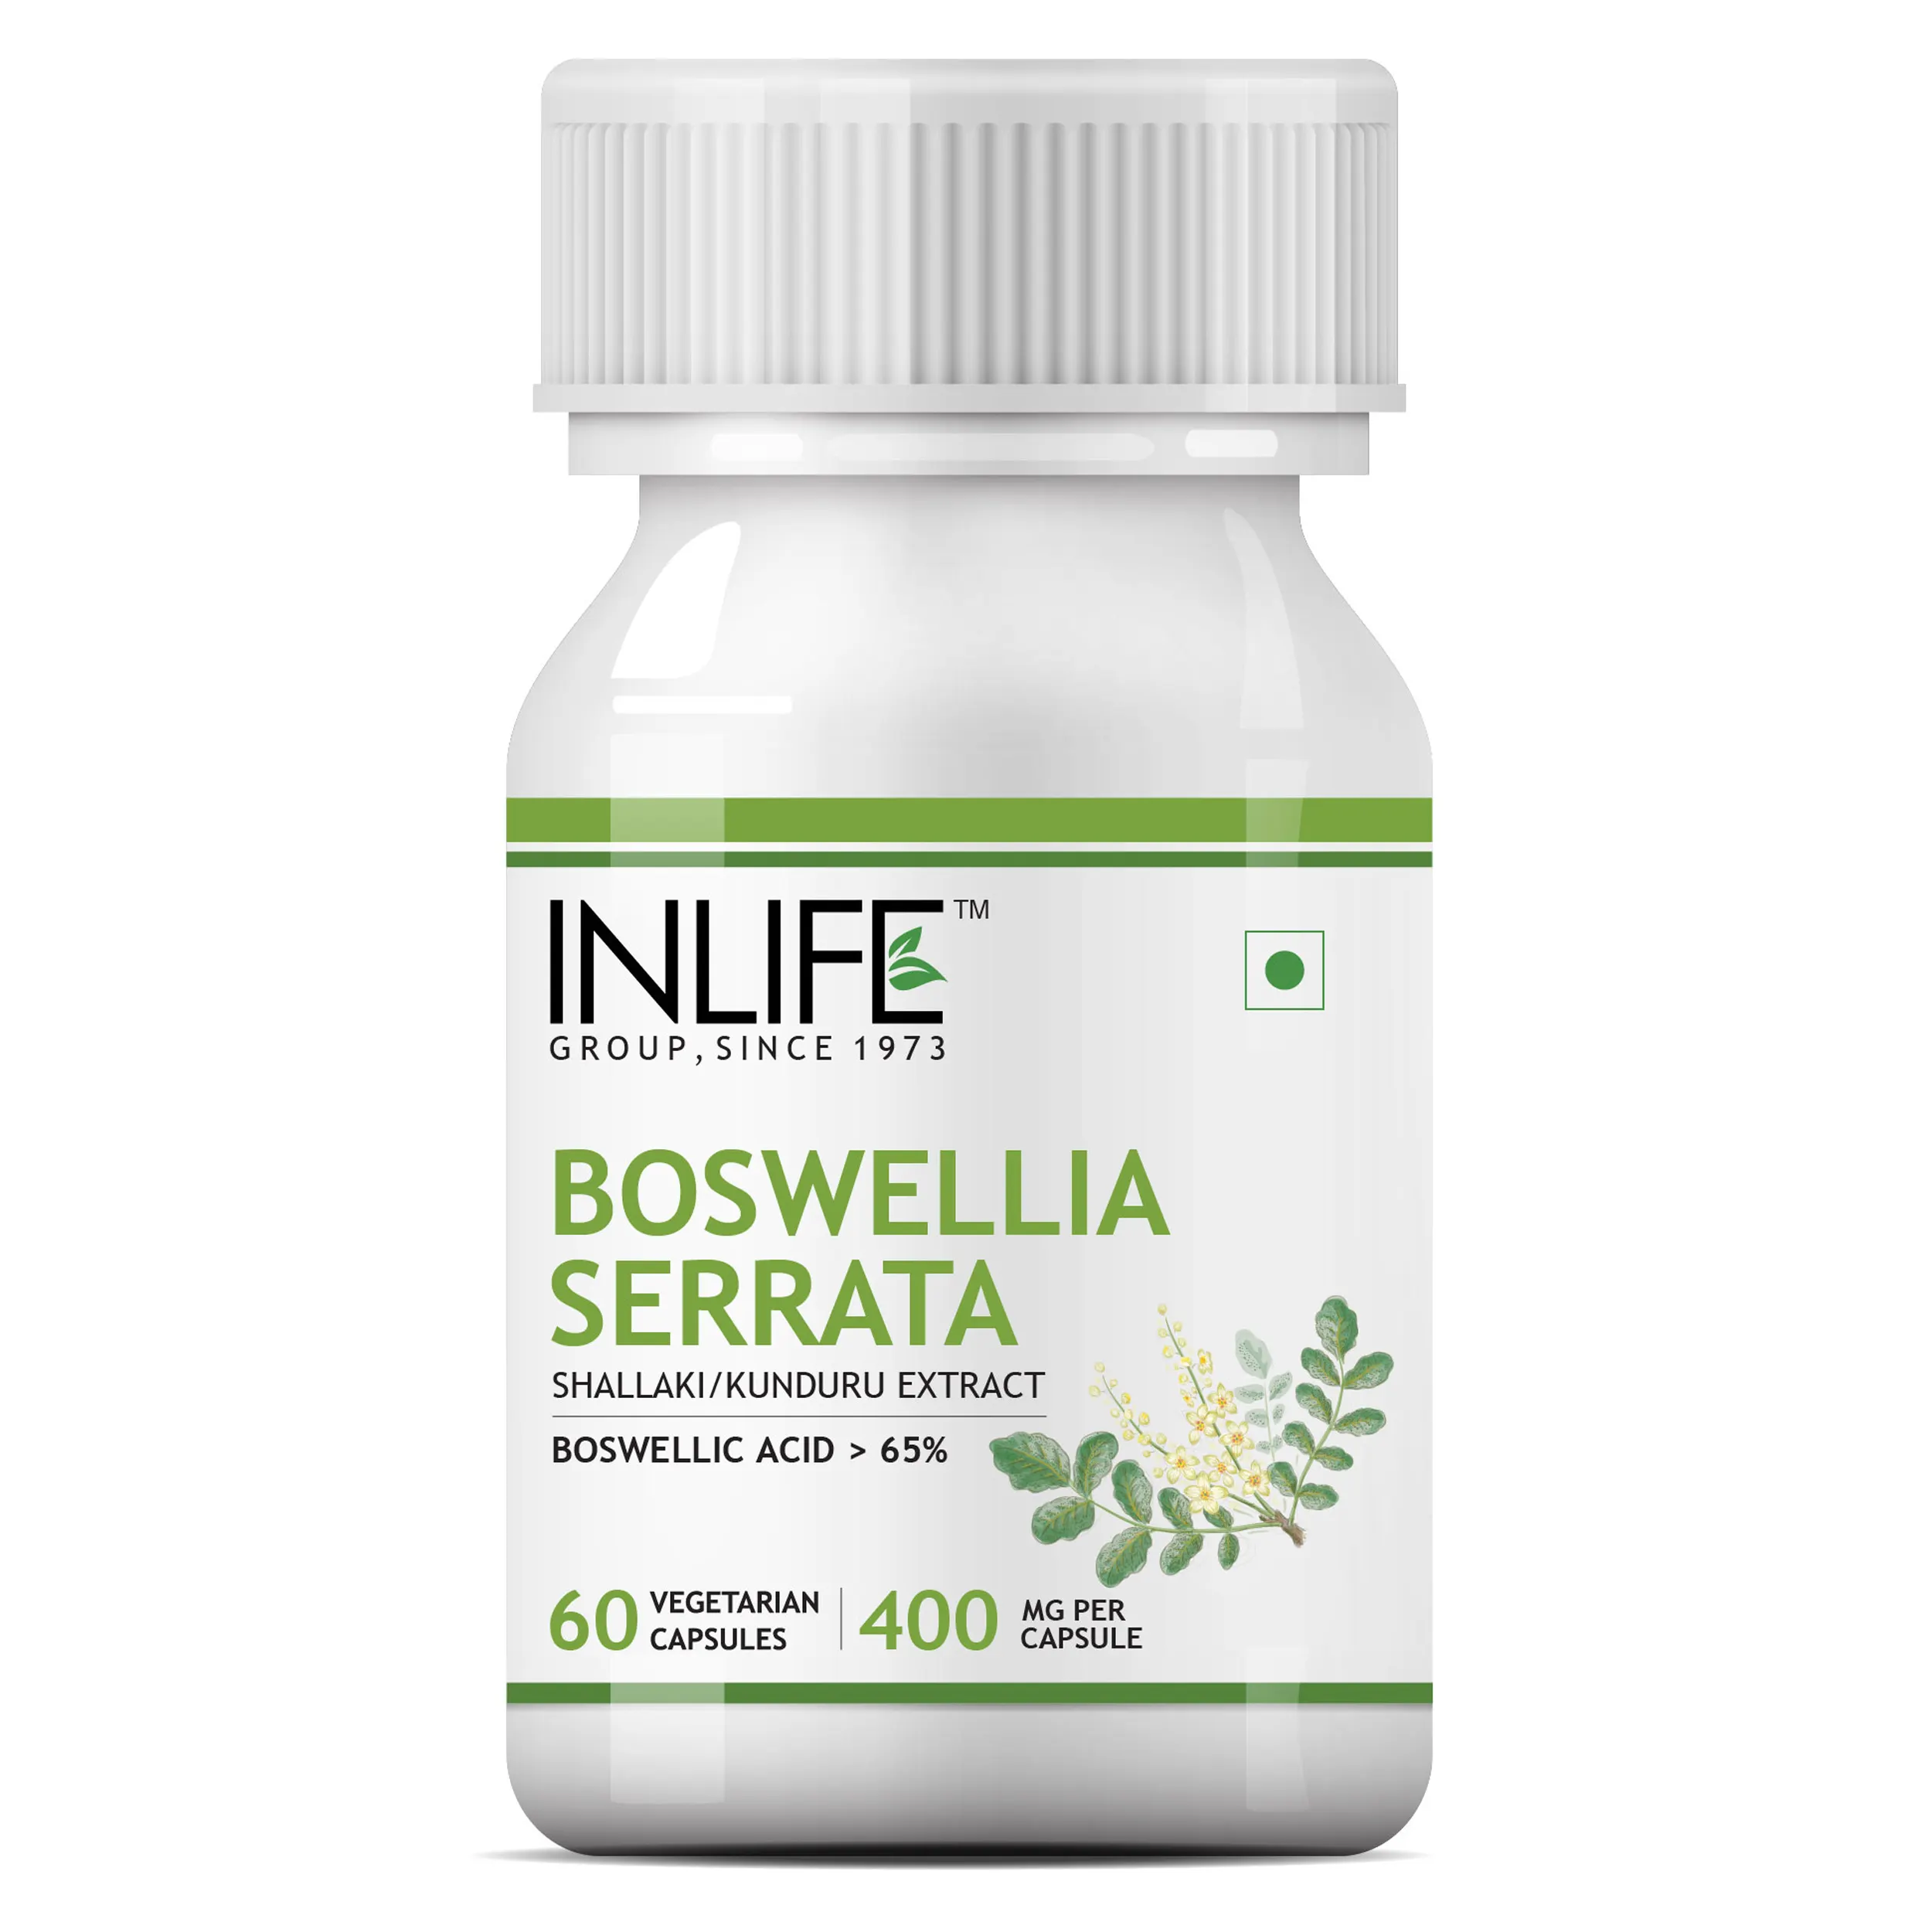 INLIFE Boswellia Serrata Extrakt (Boswellia säuren> 65%) Gelenk pflege ergänzung, 400 mg - 60 Vegetarische Kapseln